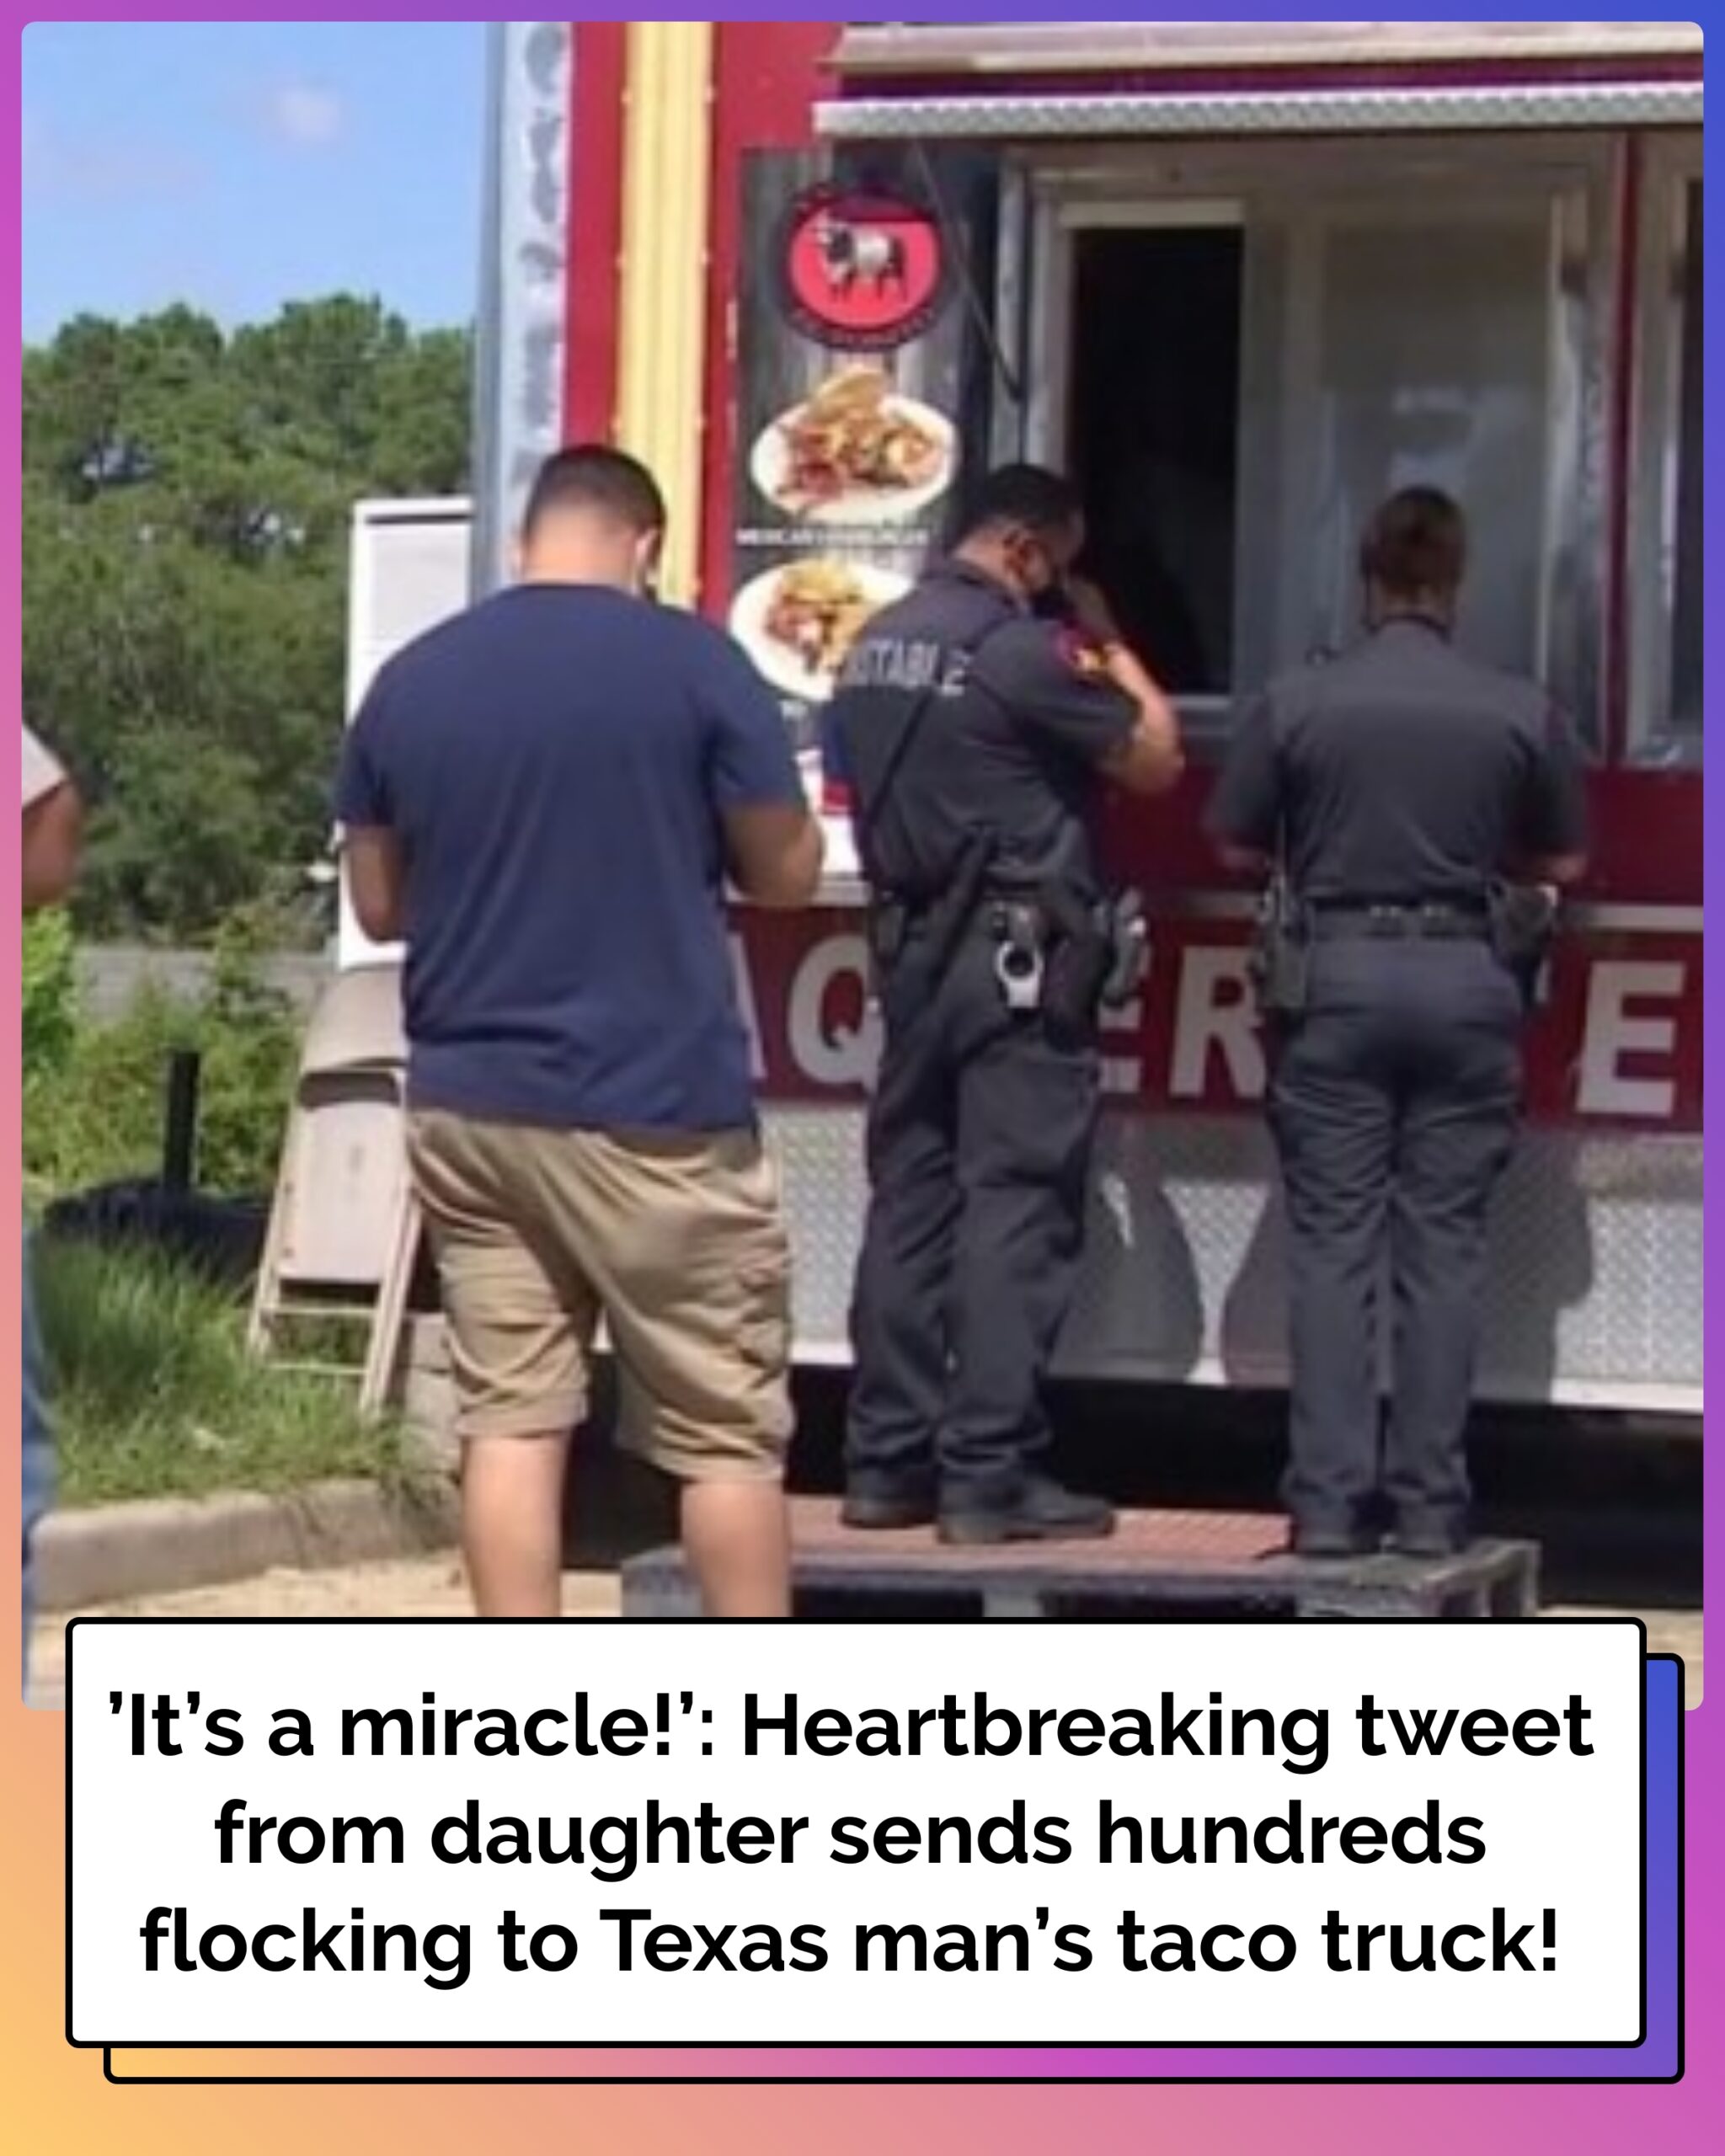 Hundreds Flocked To Texas Man’s Taco Truck After Daughter’s Heartbreaking Tweet